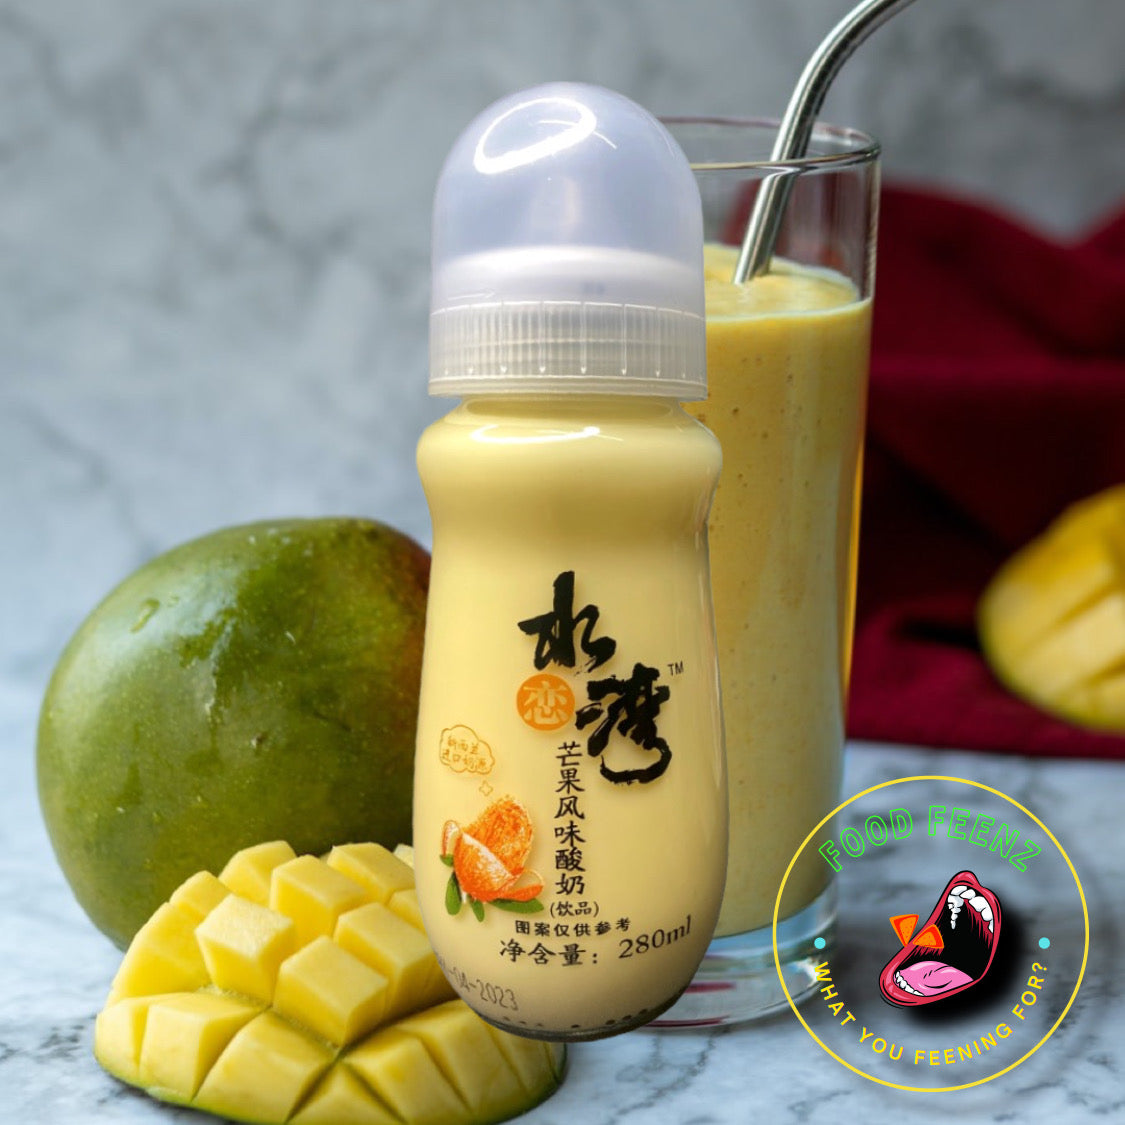 SLW Yogurt Drink Mango Flavor (China)